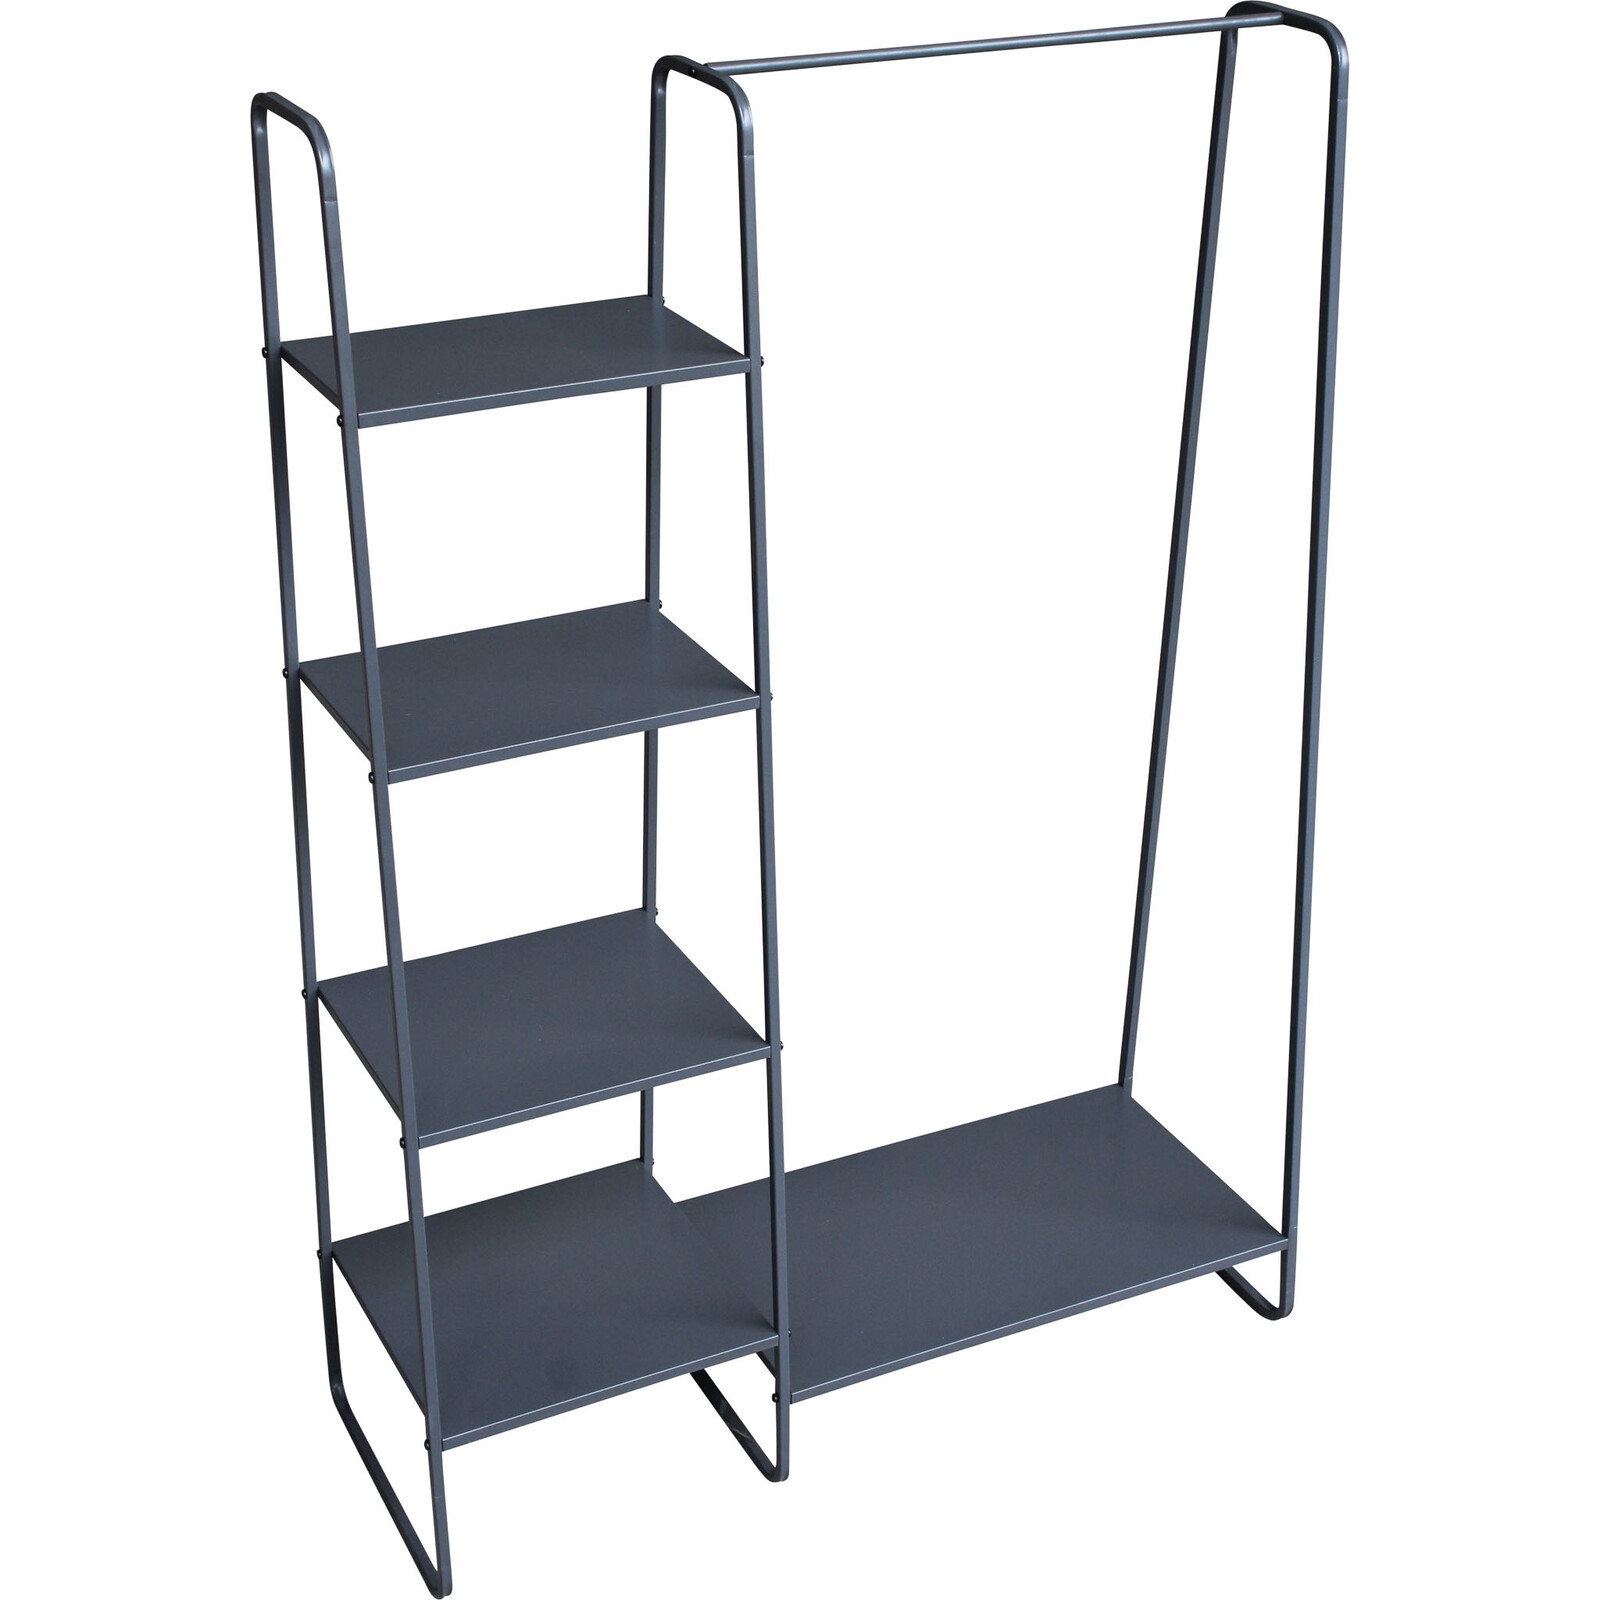 Display Rack w/ Shelves